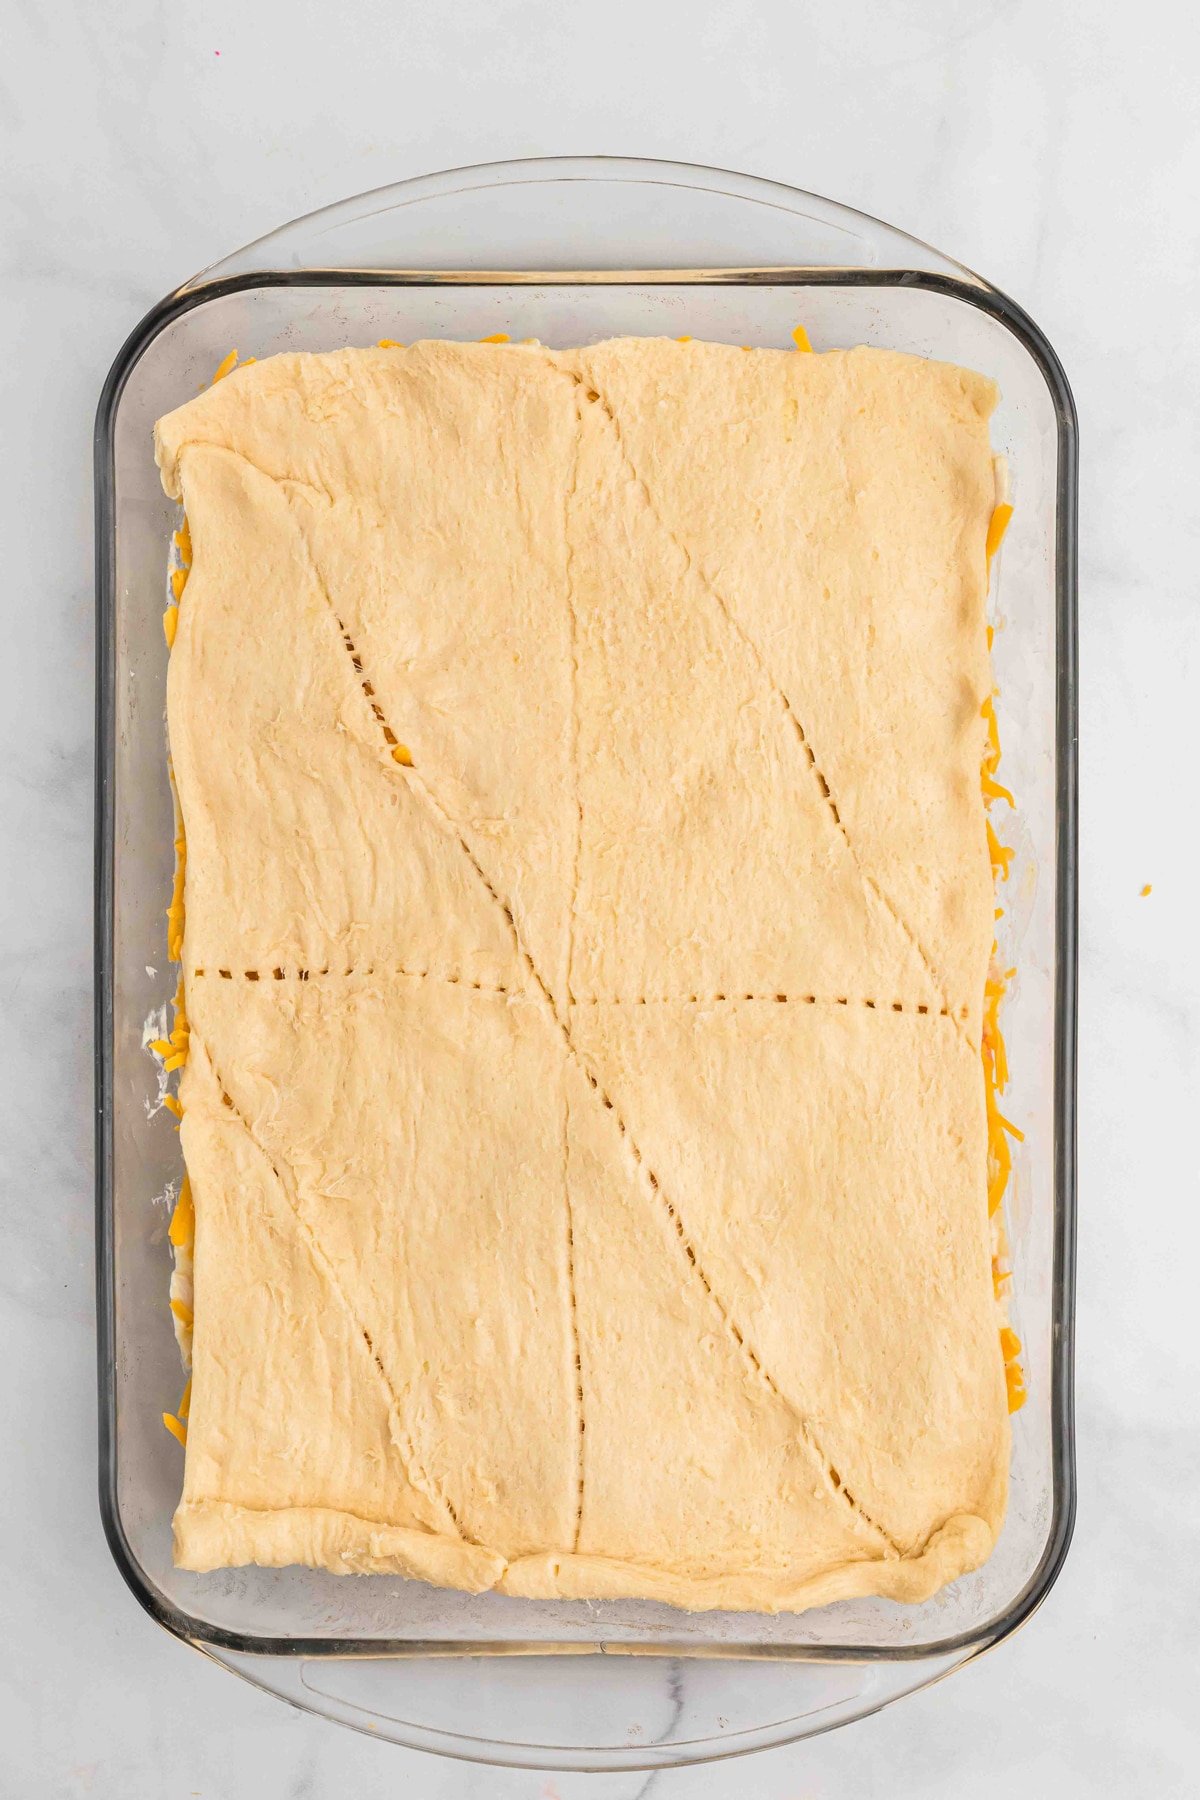 Crescent roll dough spread over chicken pot pie filling in a casserole dish